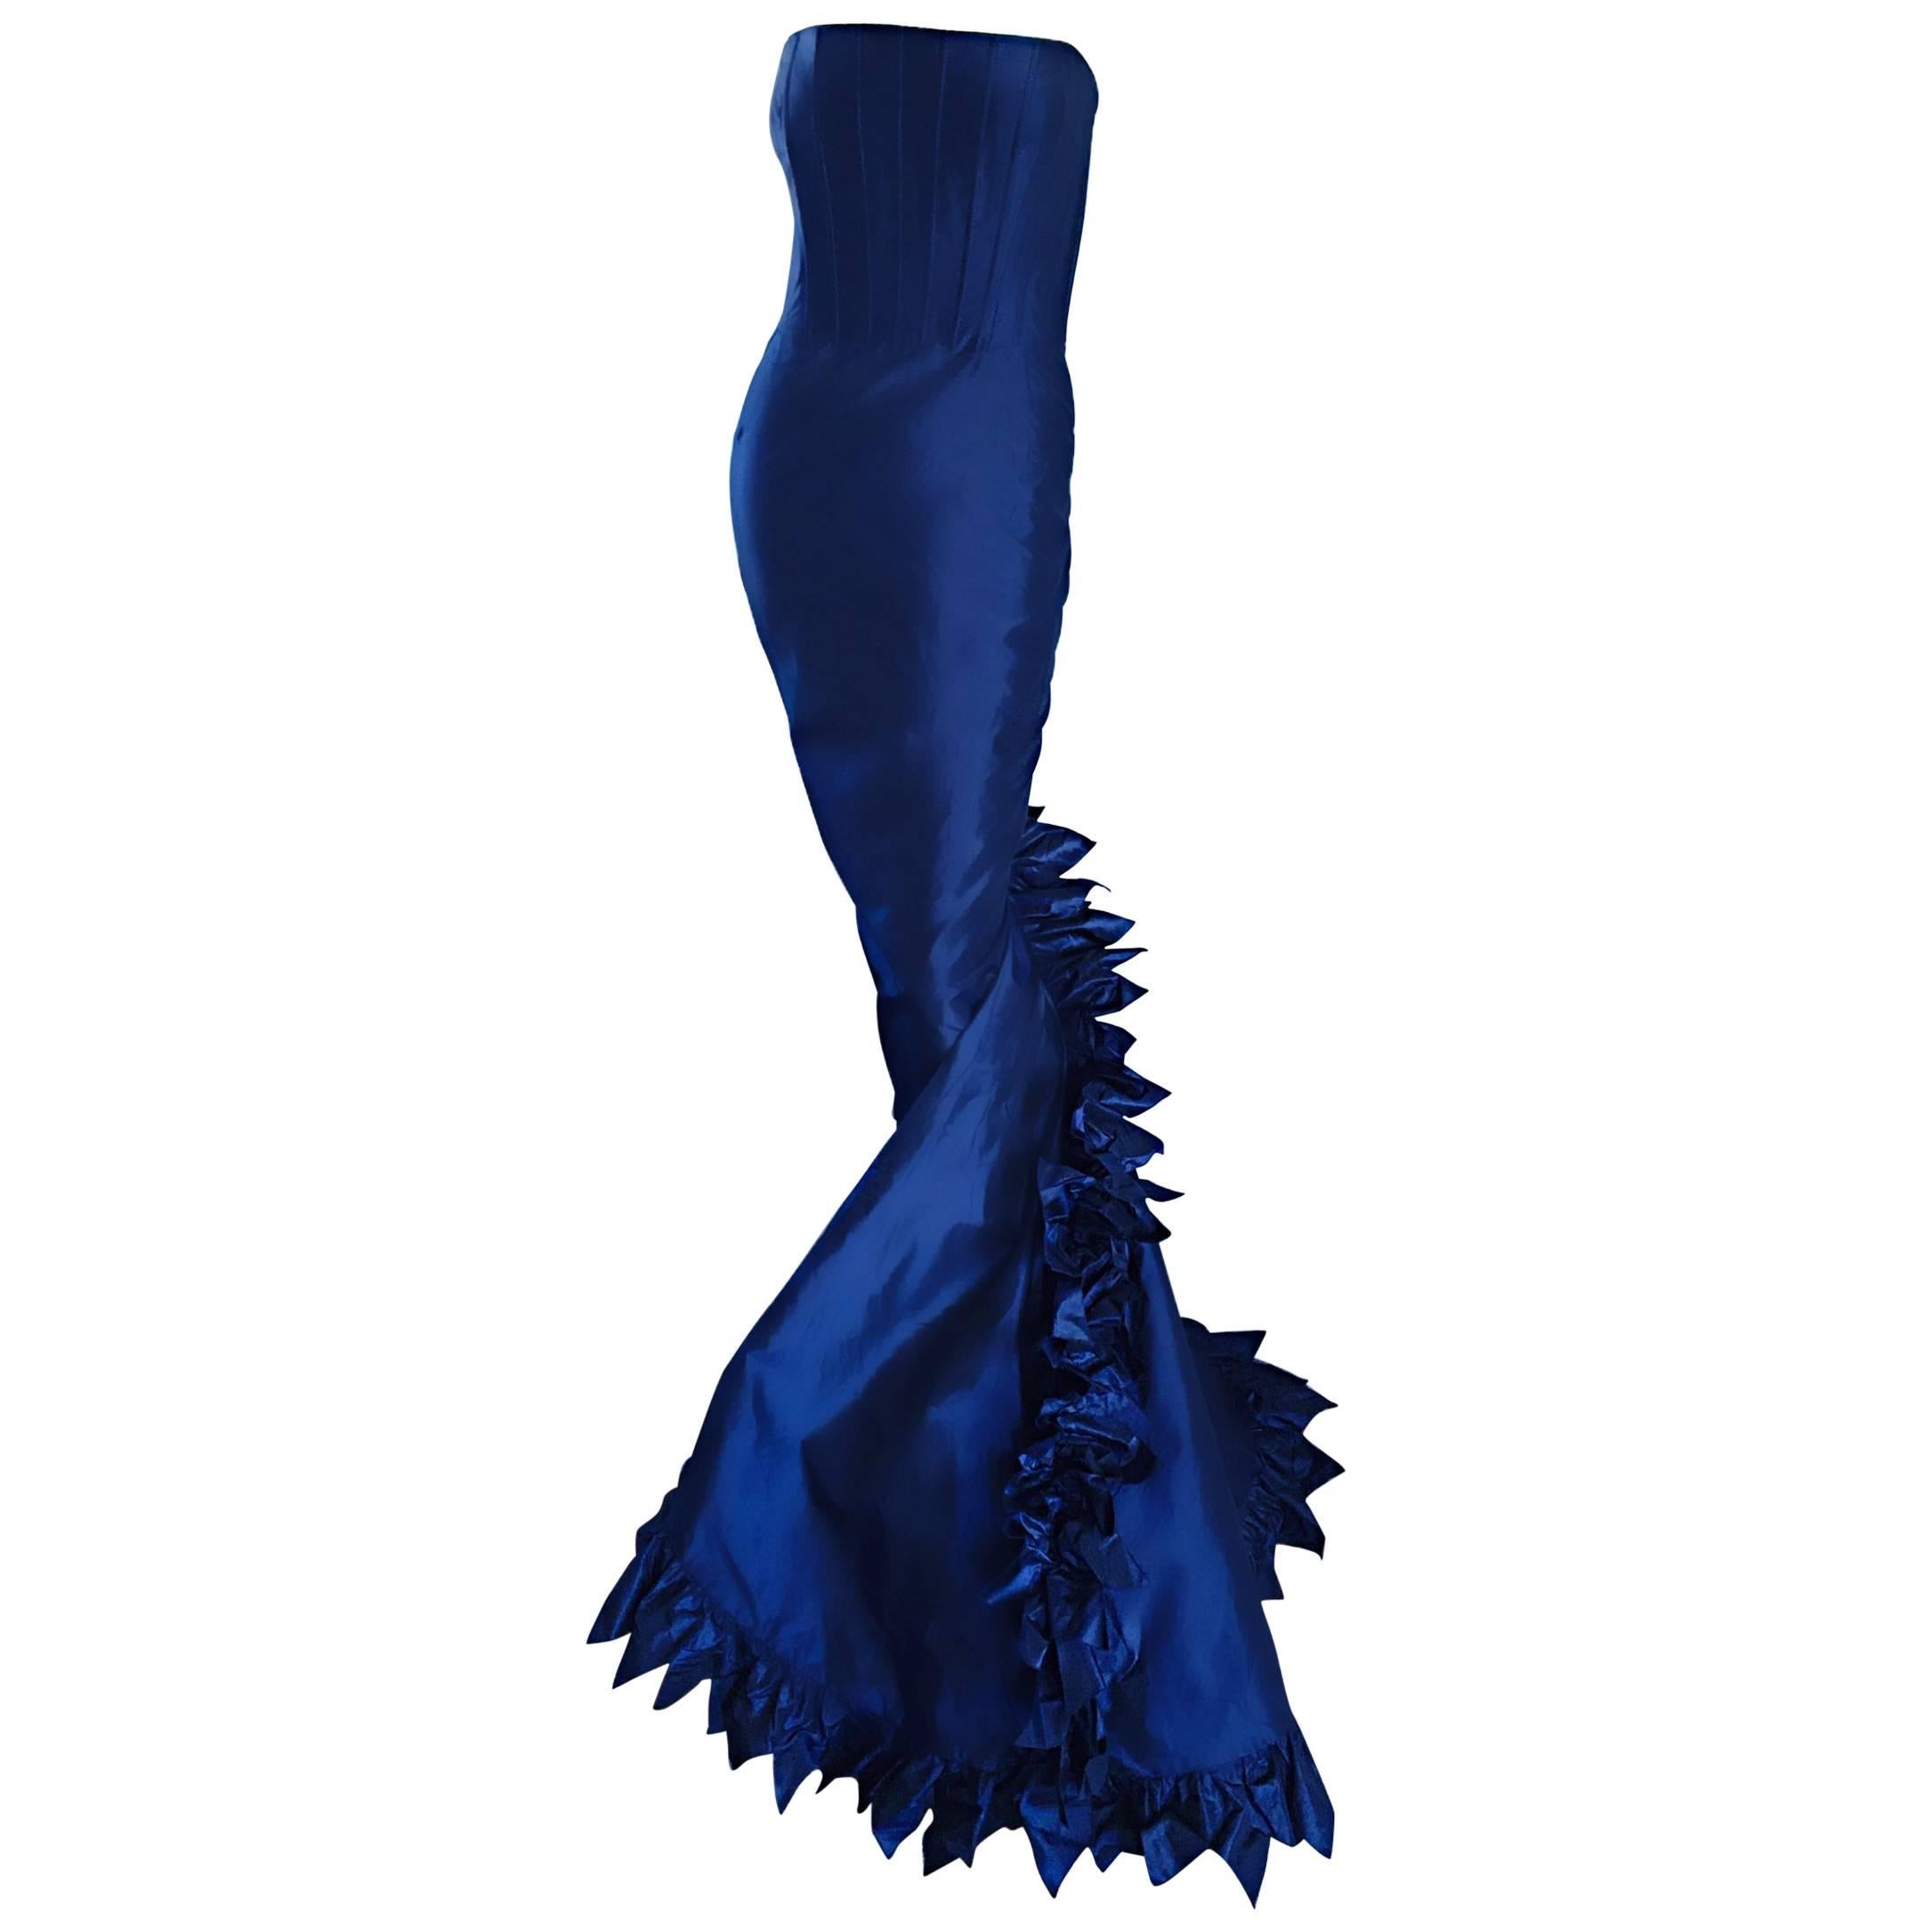 Exquisite Vintage Oscar de la Renta Navy Blue Silk Taffeta Dramatic Size 6 Gown